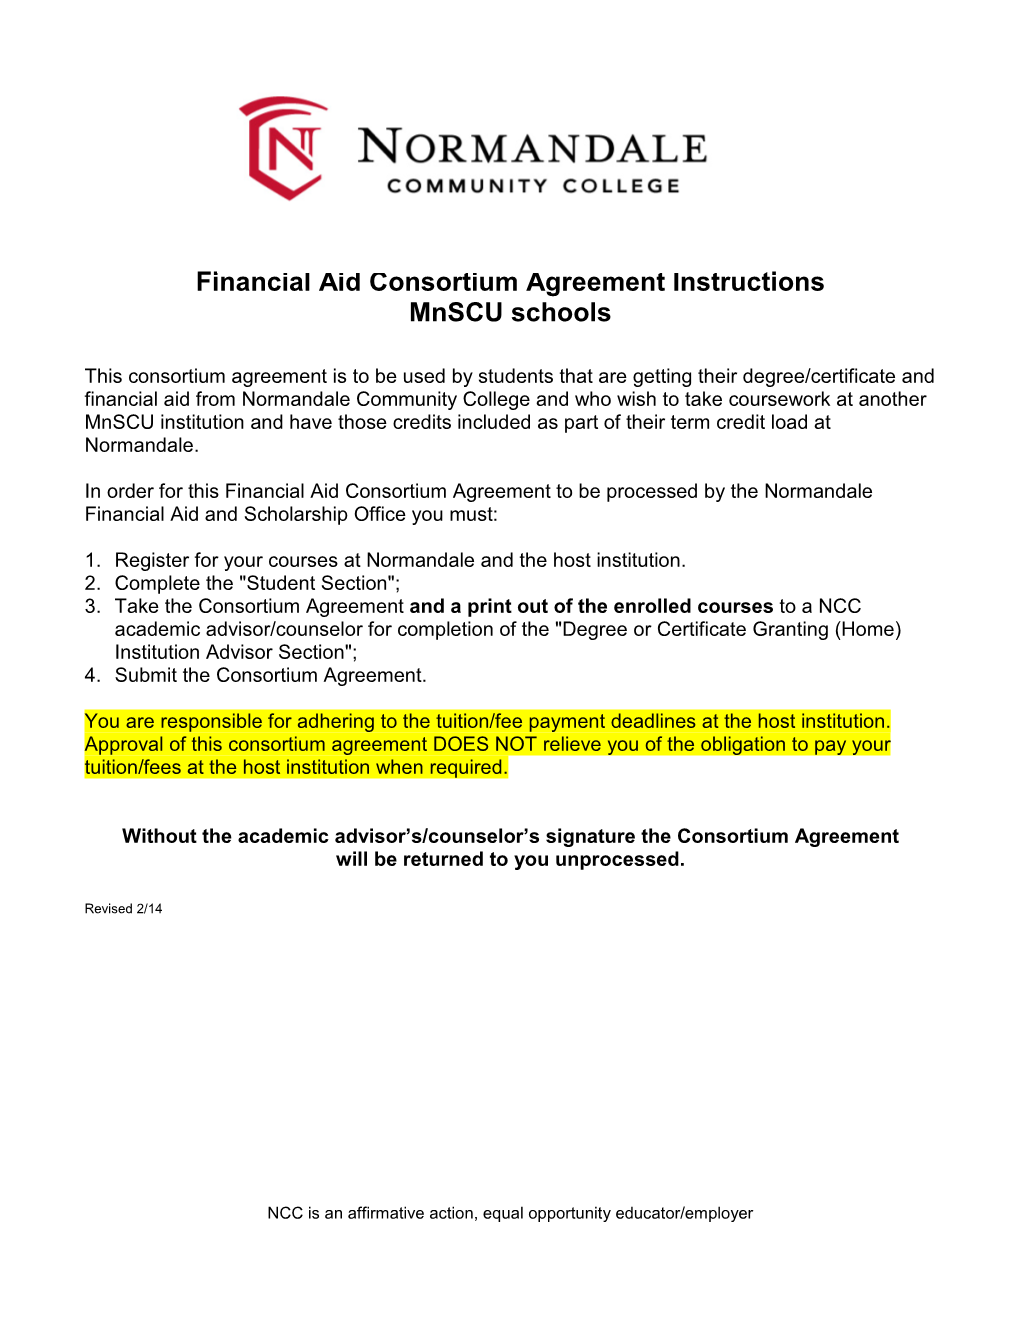 Financial Aid Consortium Agreement Instructions Mnscu Schools